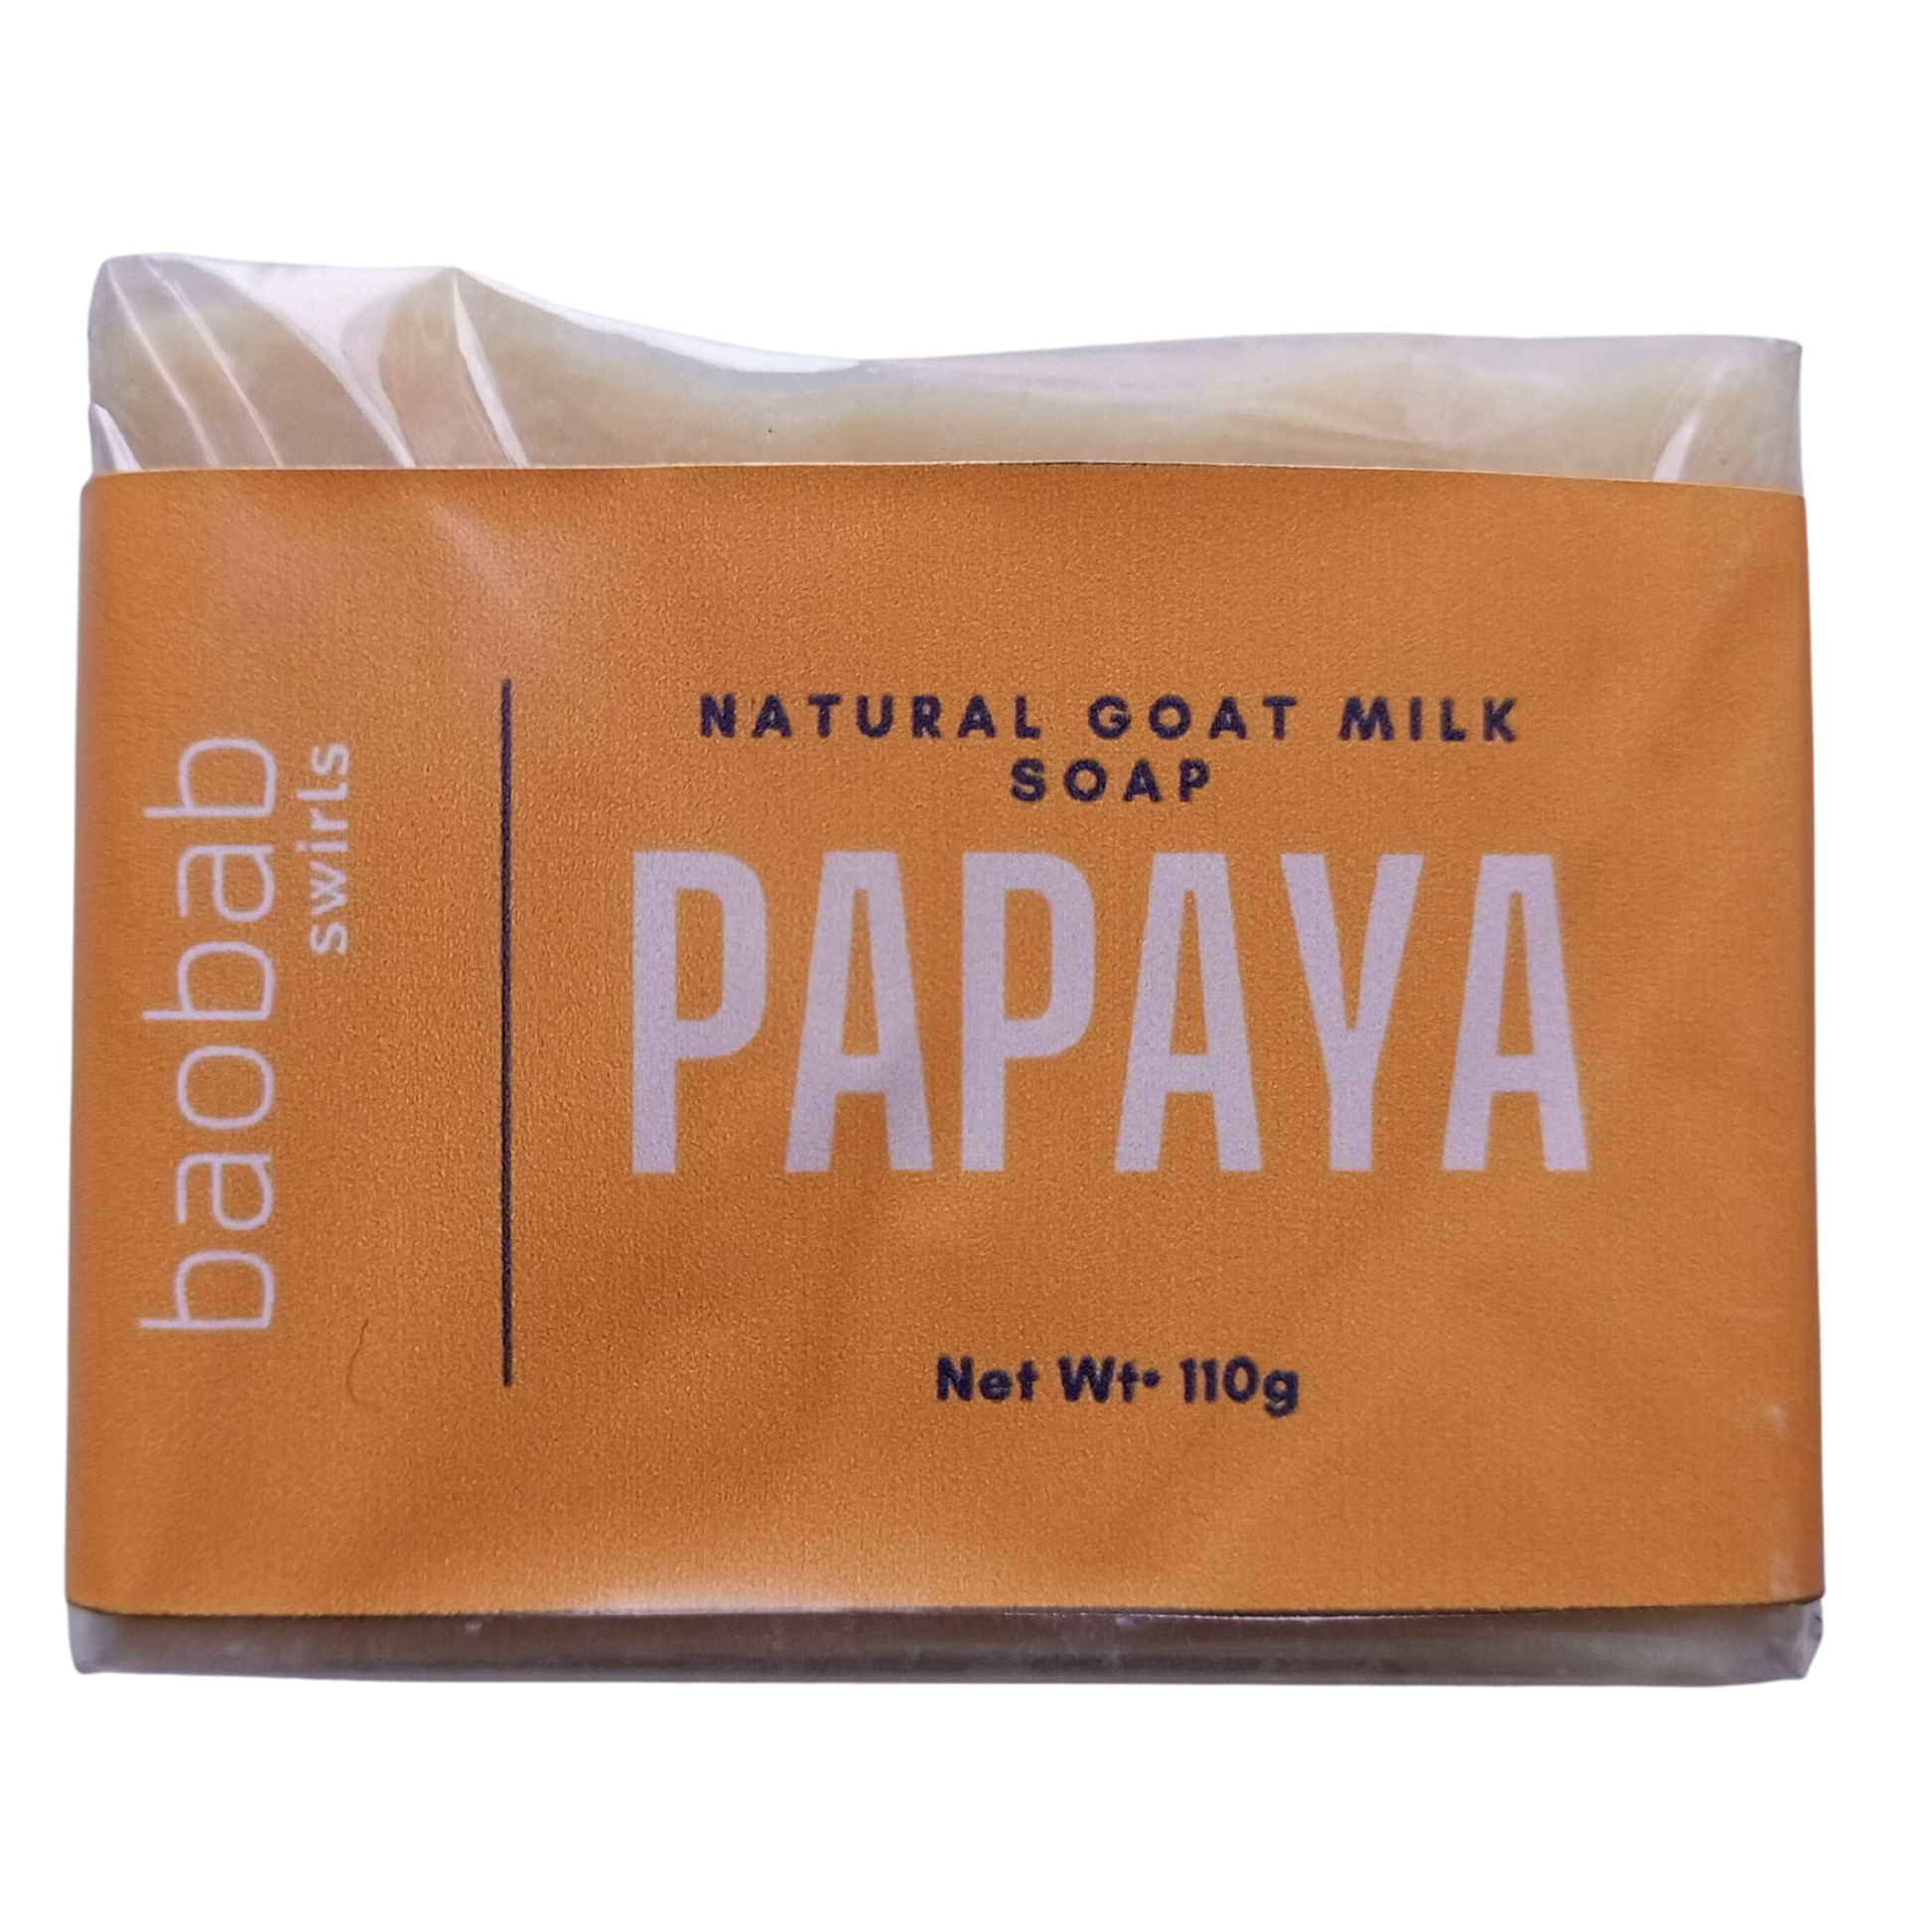 Papaya Goat Milk Soap Baobab Swirls